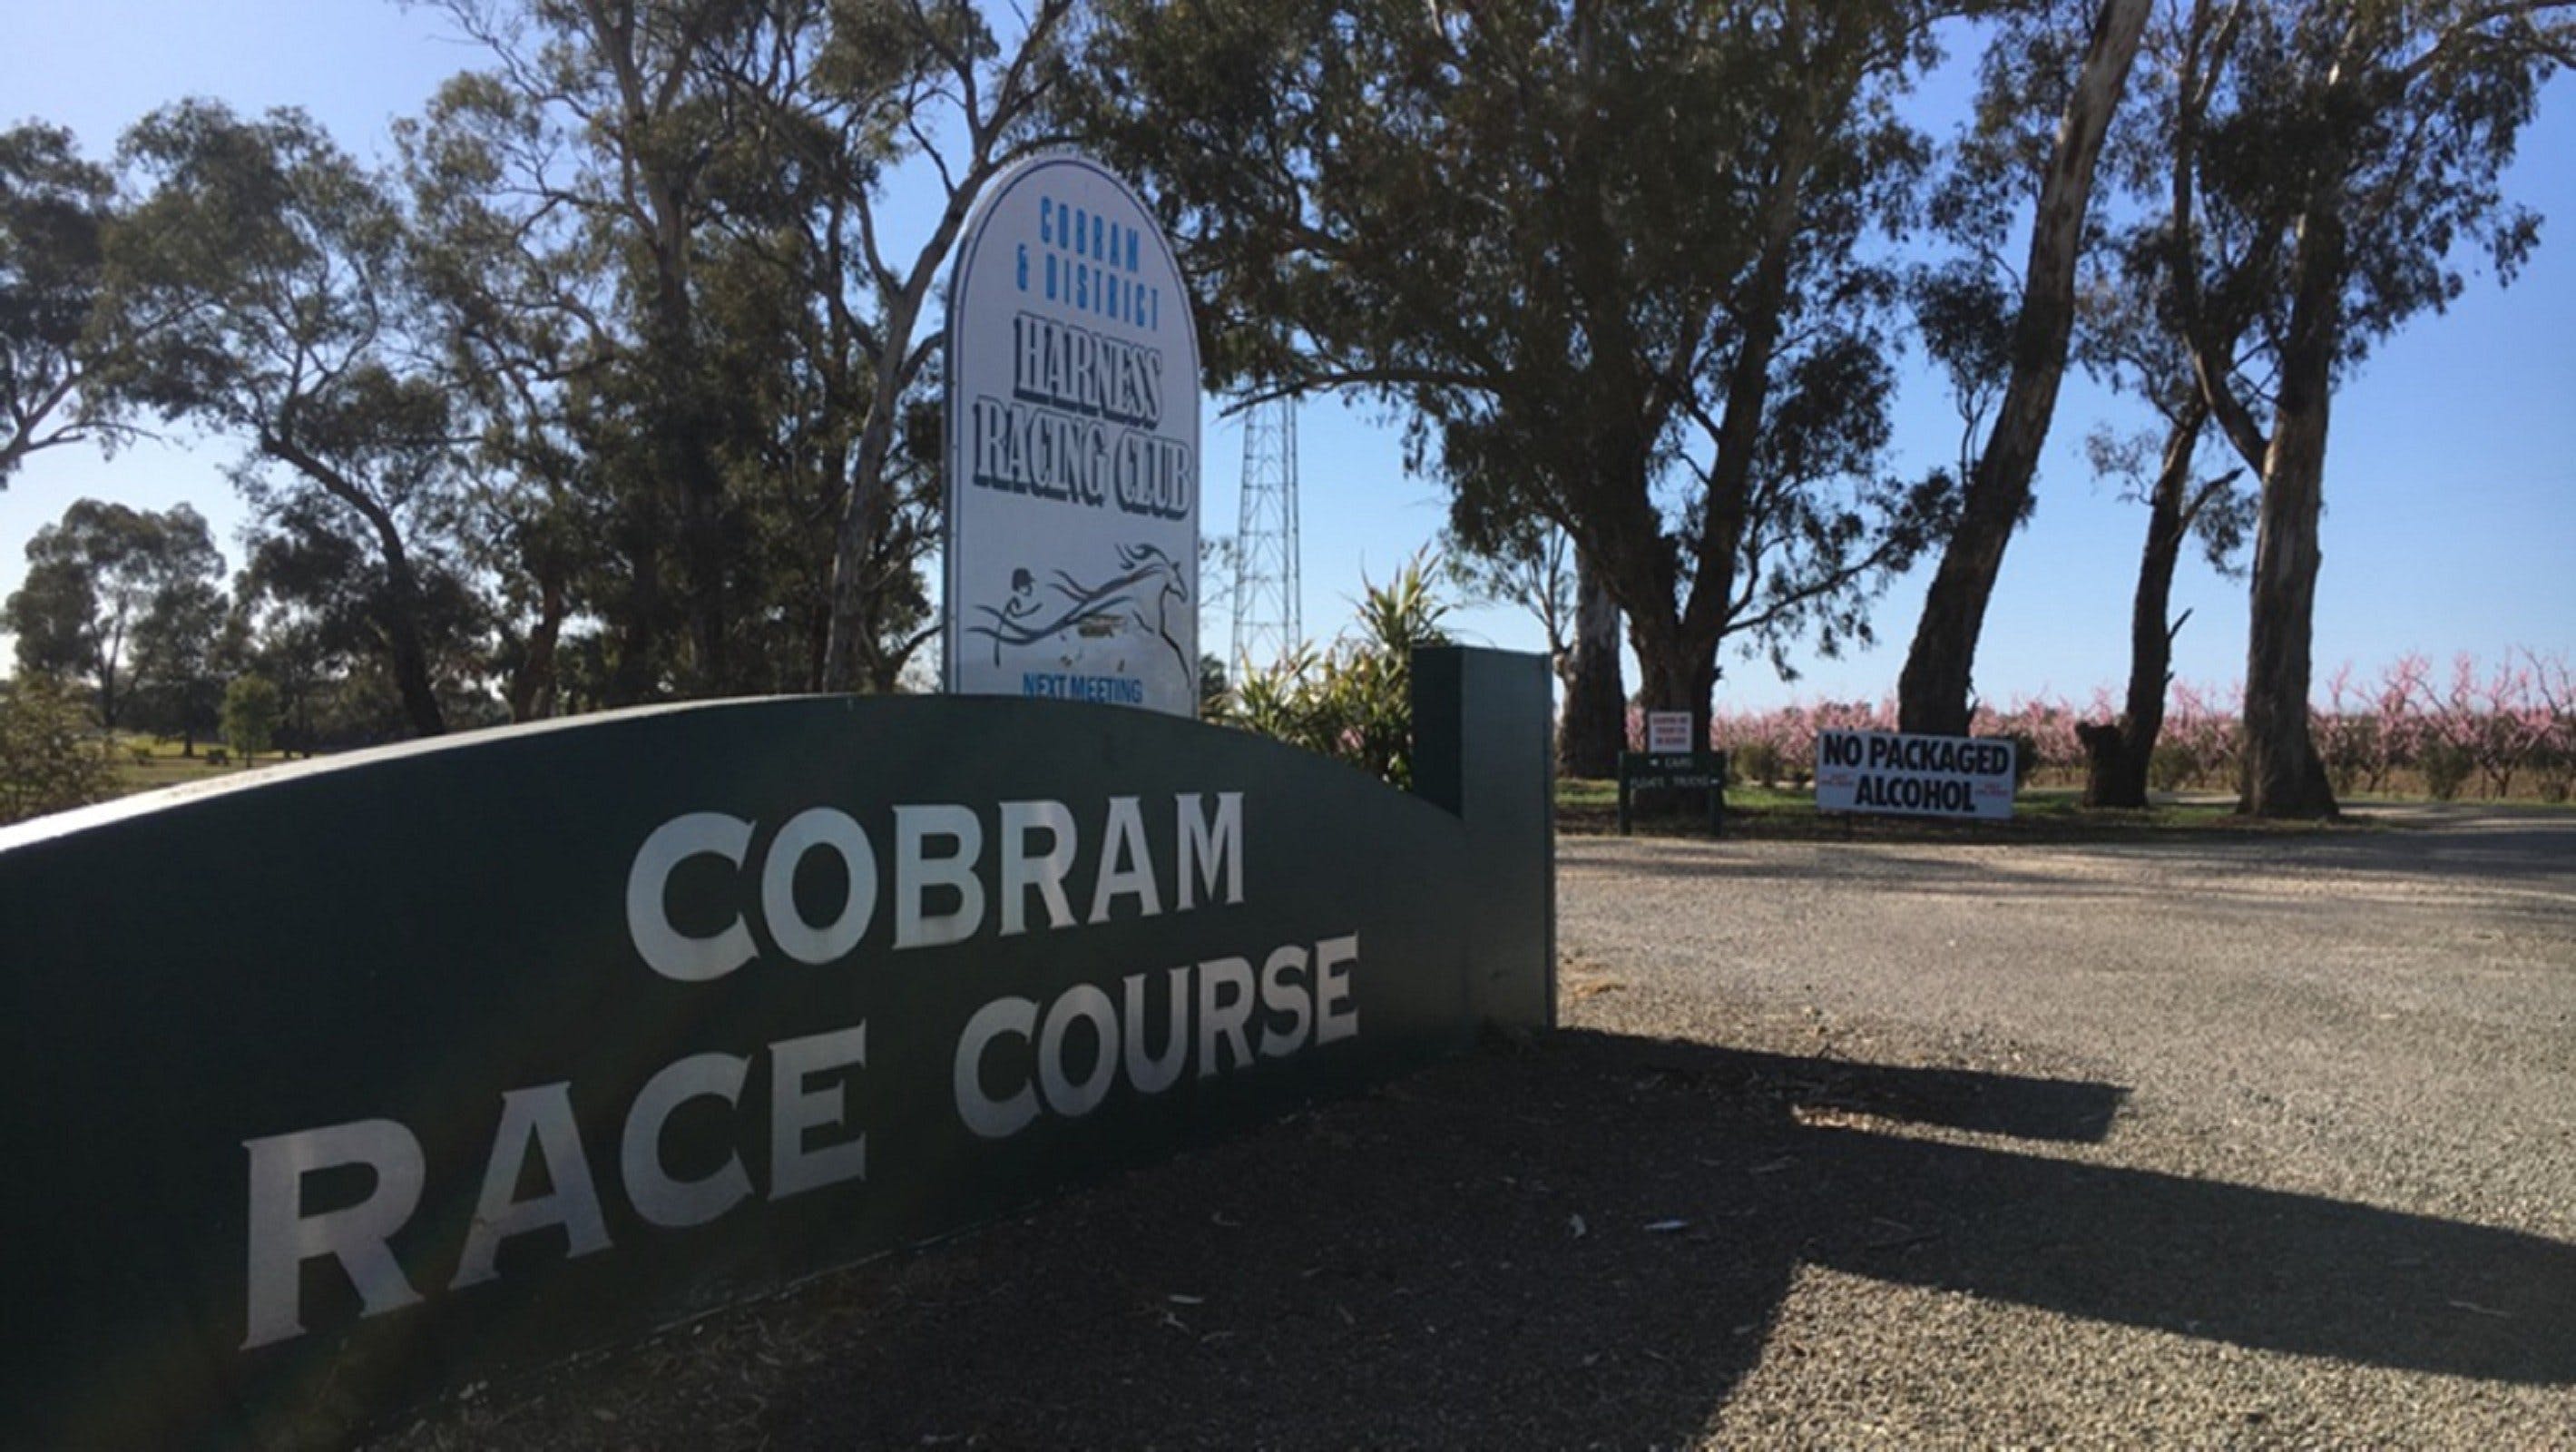 Cobram and District Harness Racing Club - Australia Accommodation